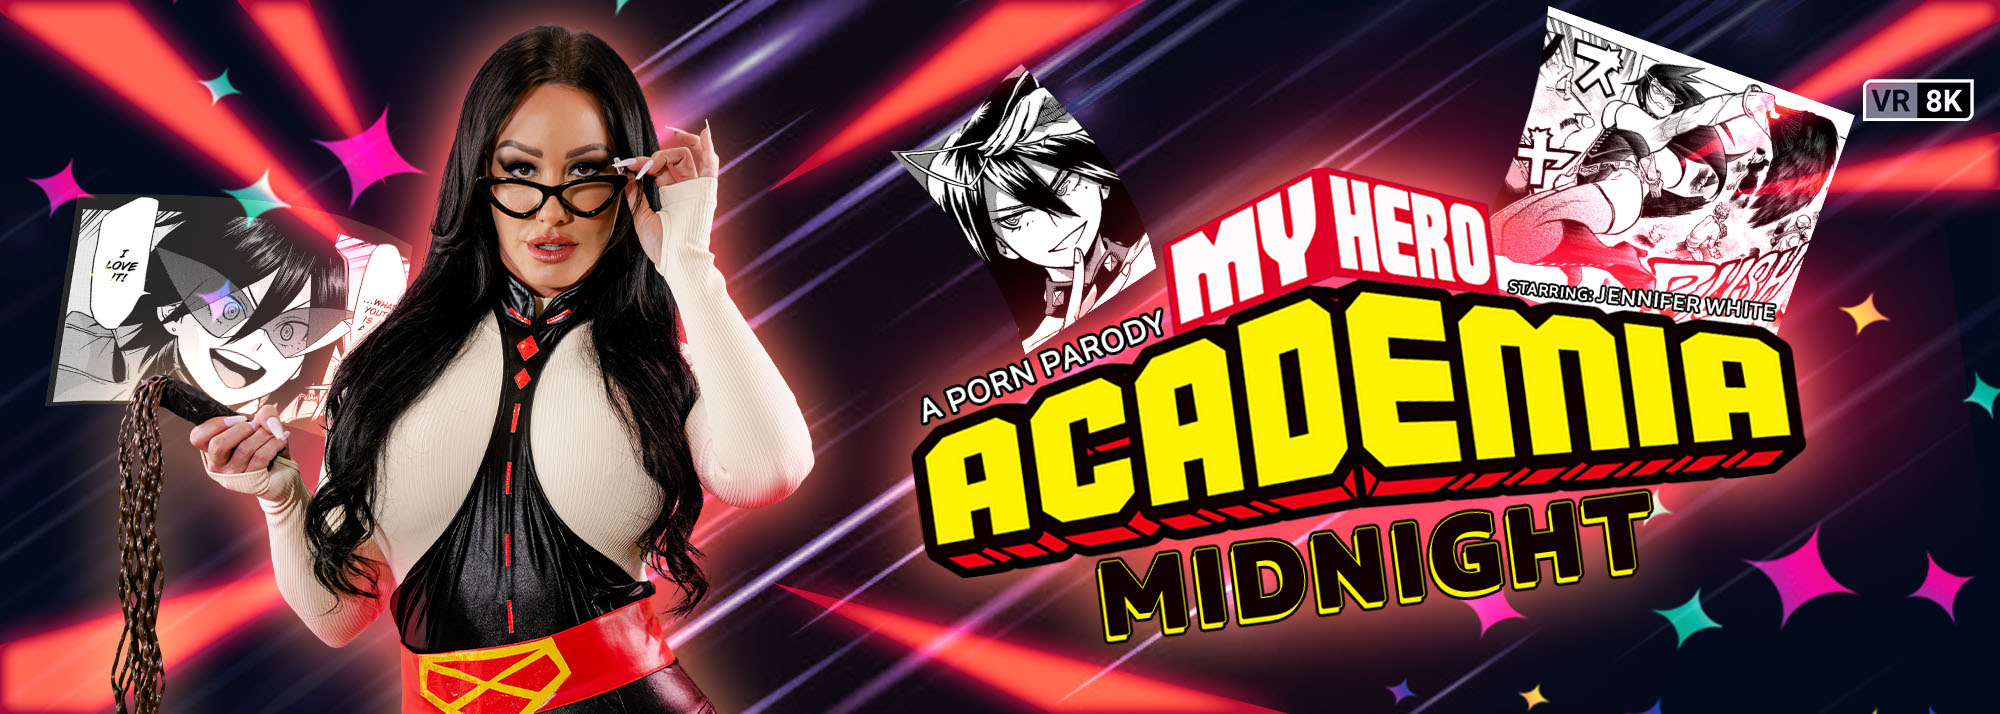 My Hero Academia: Midnight (A Porn Parody) Slideshow